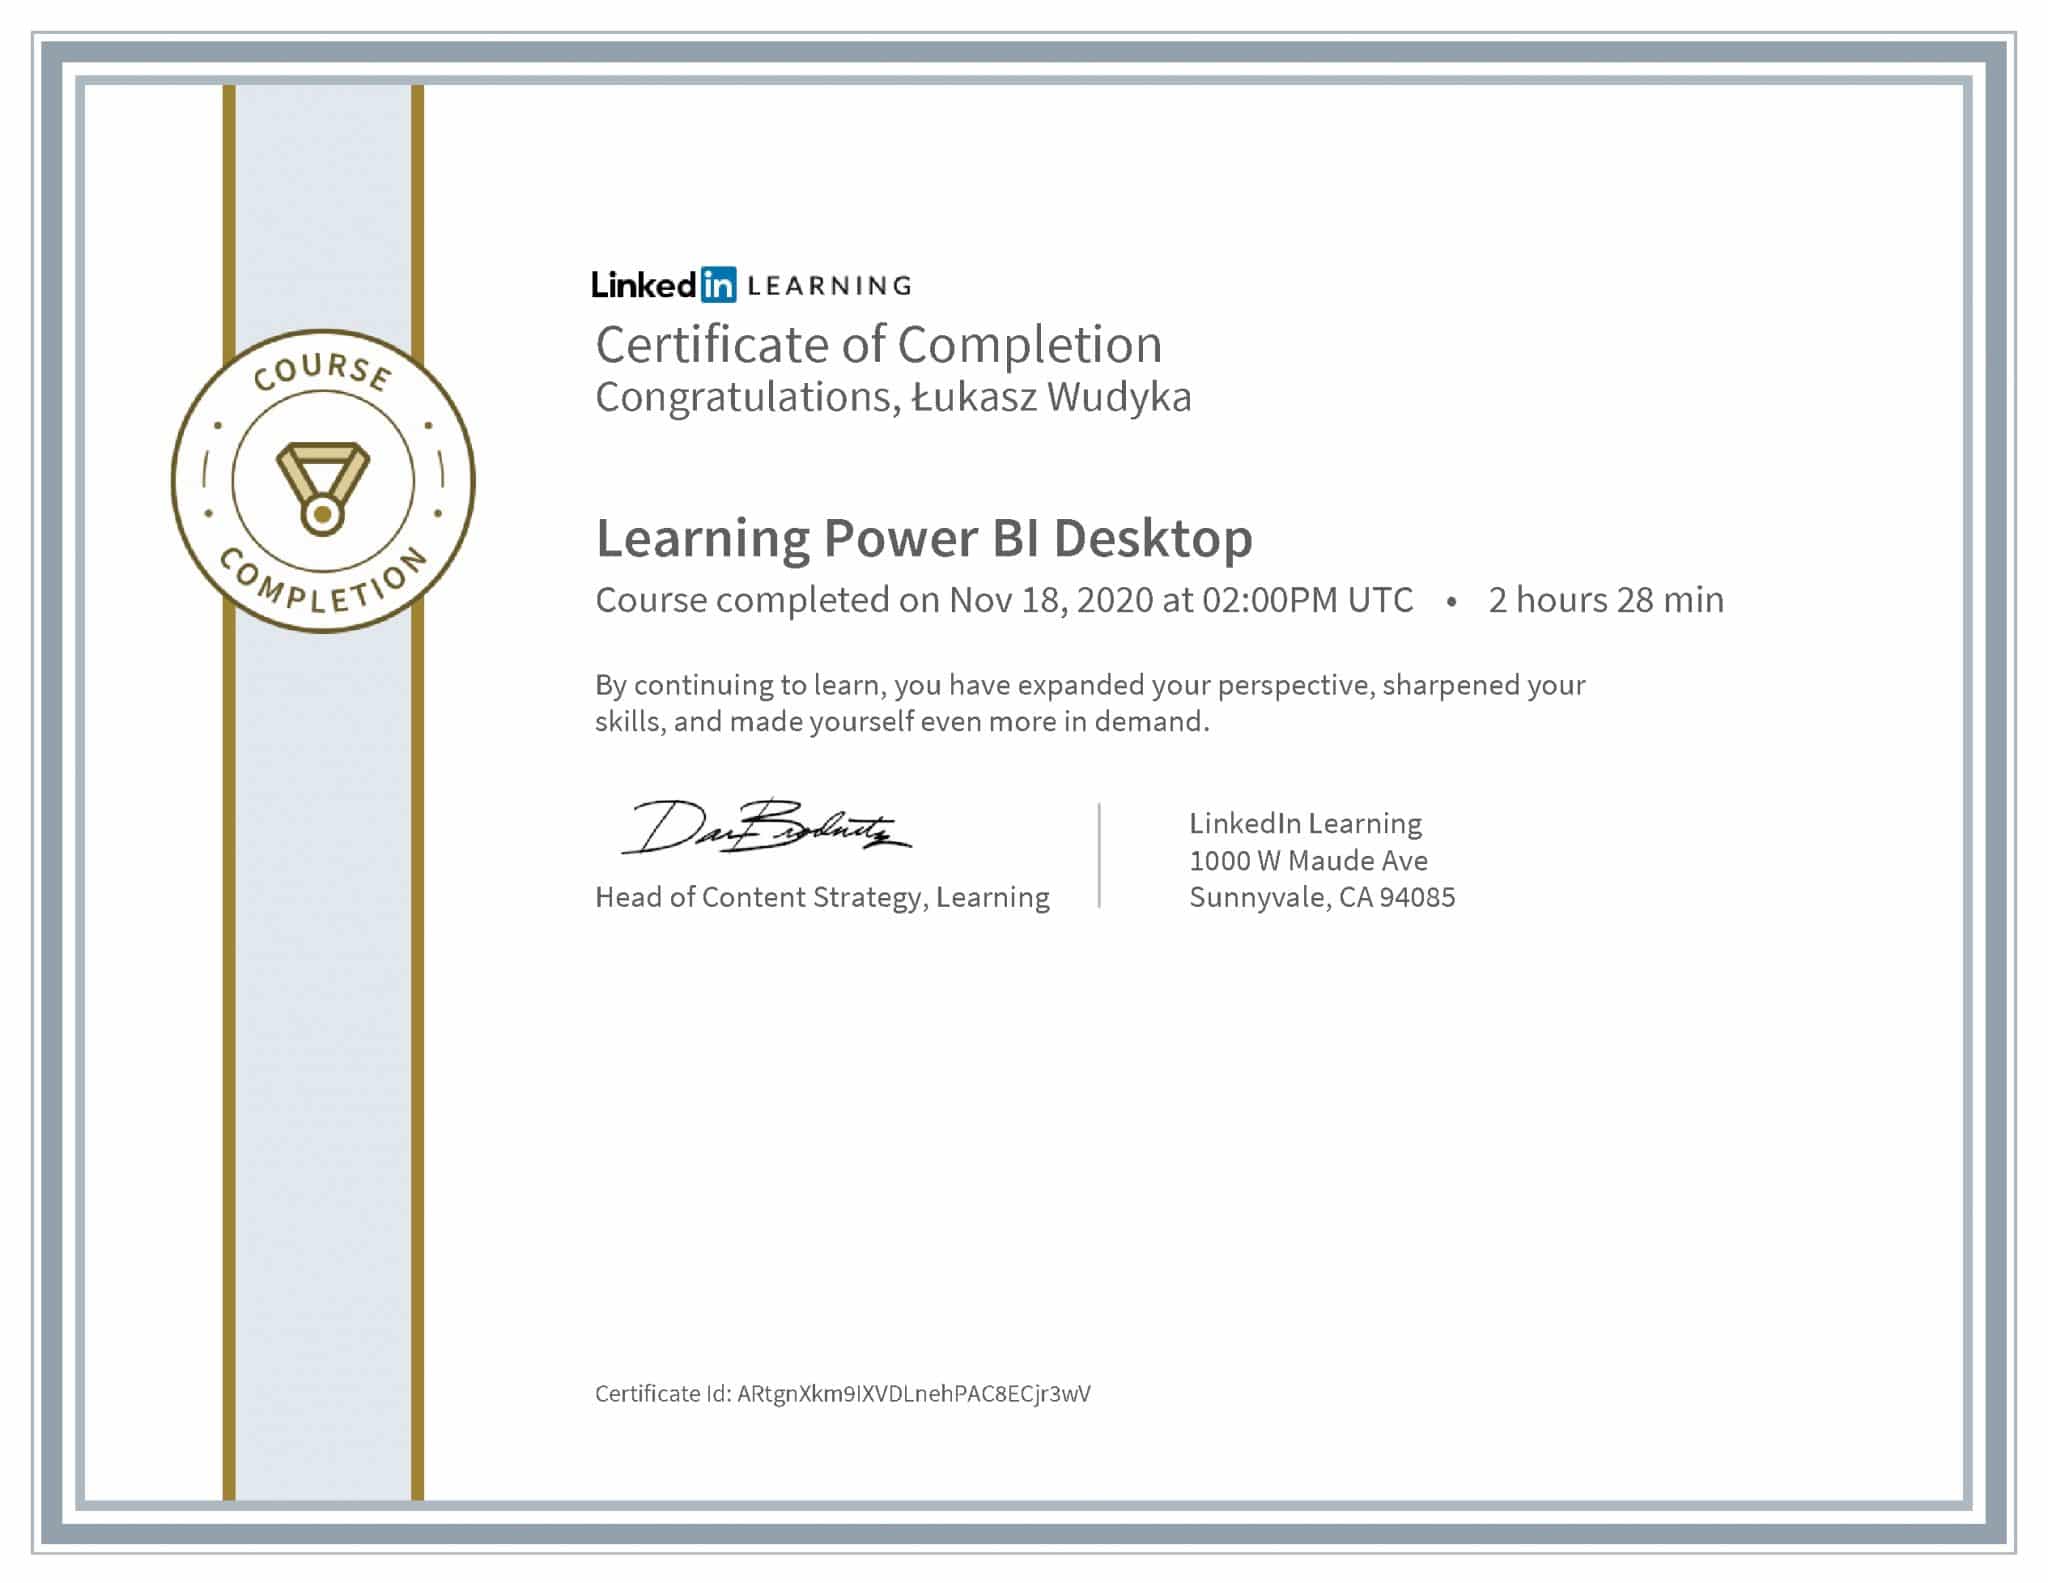 Łukasz Wudyka certyfikat LinkedIn Learning Power BI Desktop